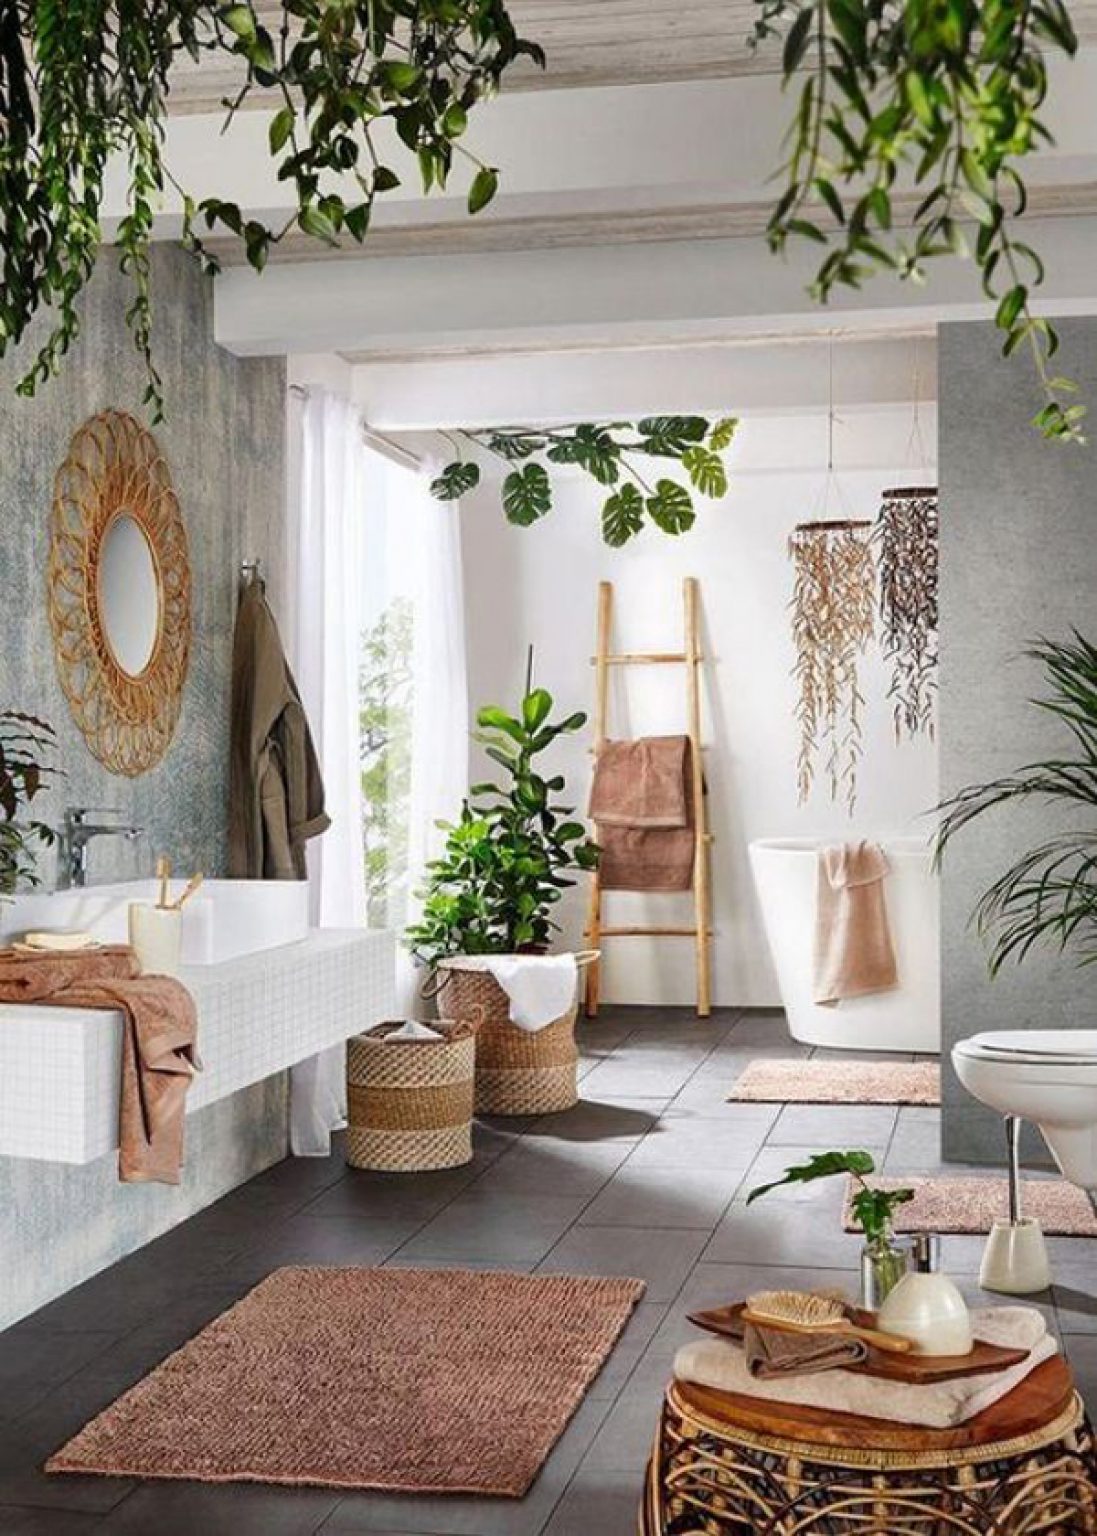 43+ Modern Boho Chic Decor Ideas For Interiors, Homes & Parties 2021